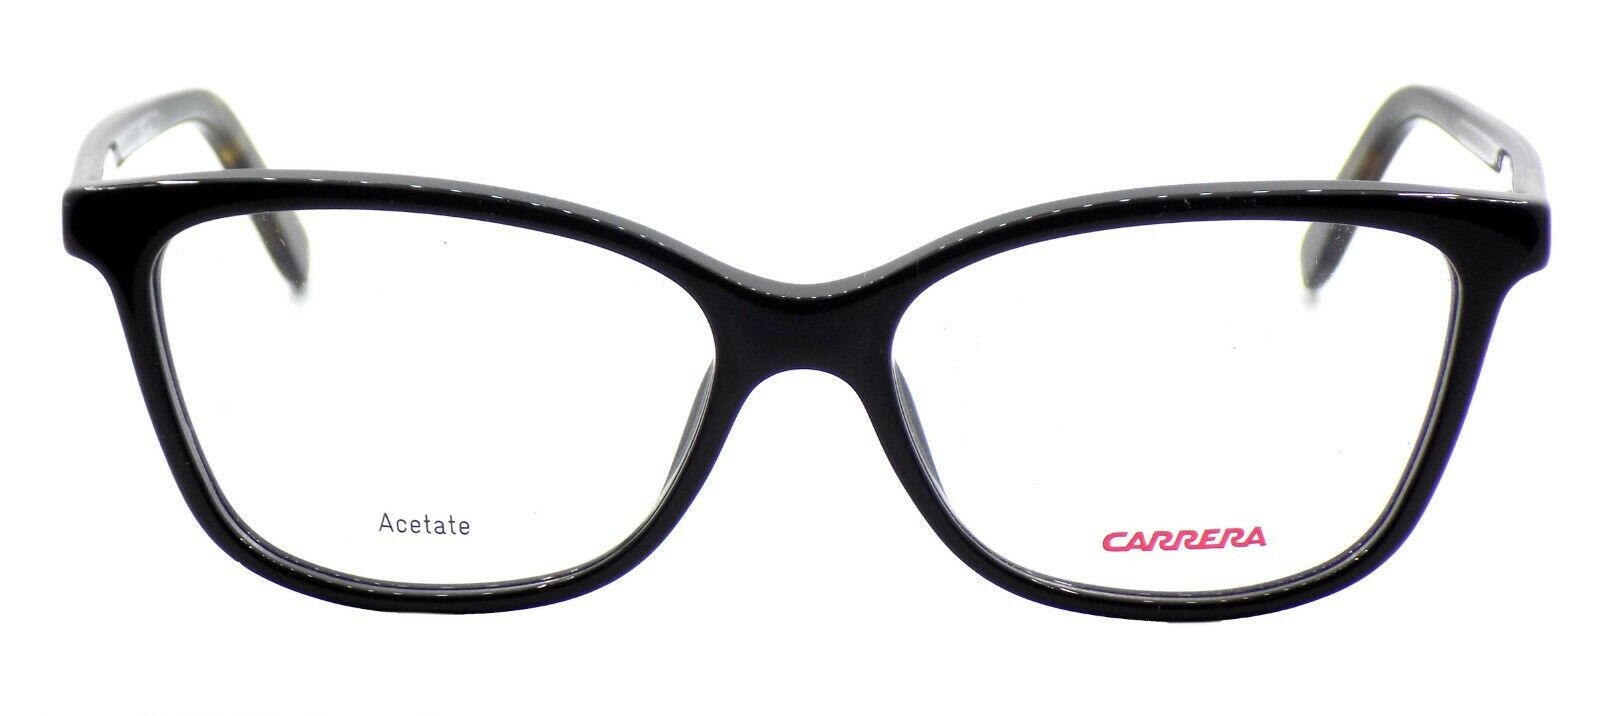 2-Carrera CA6646 3L3 Women's Eyeglasses Frames 52-15-140 Black Grey + CASE-762753612229-IKSpecs